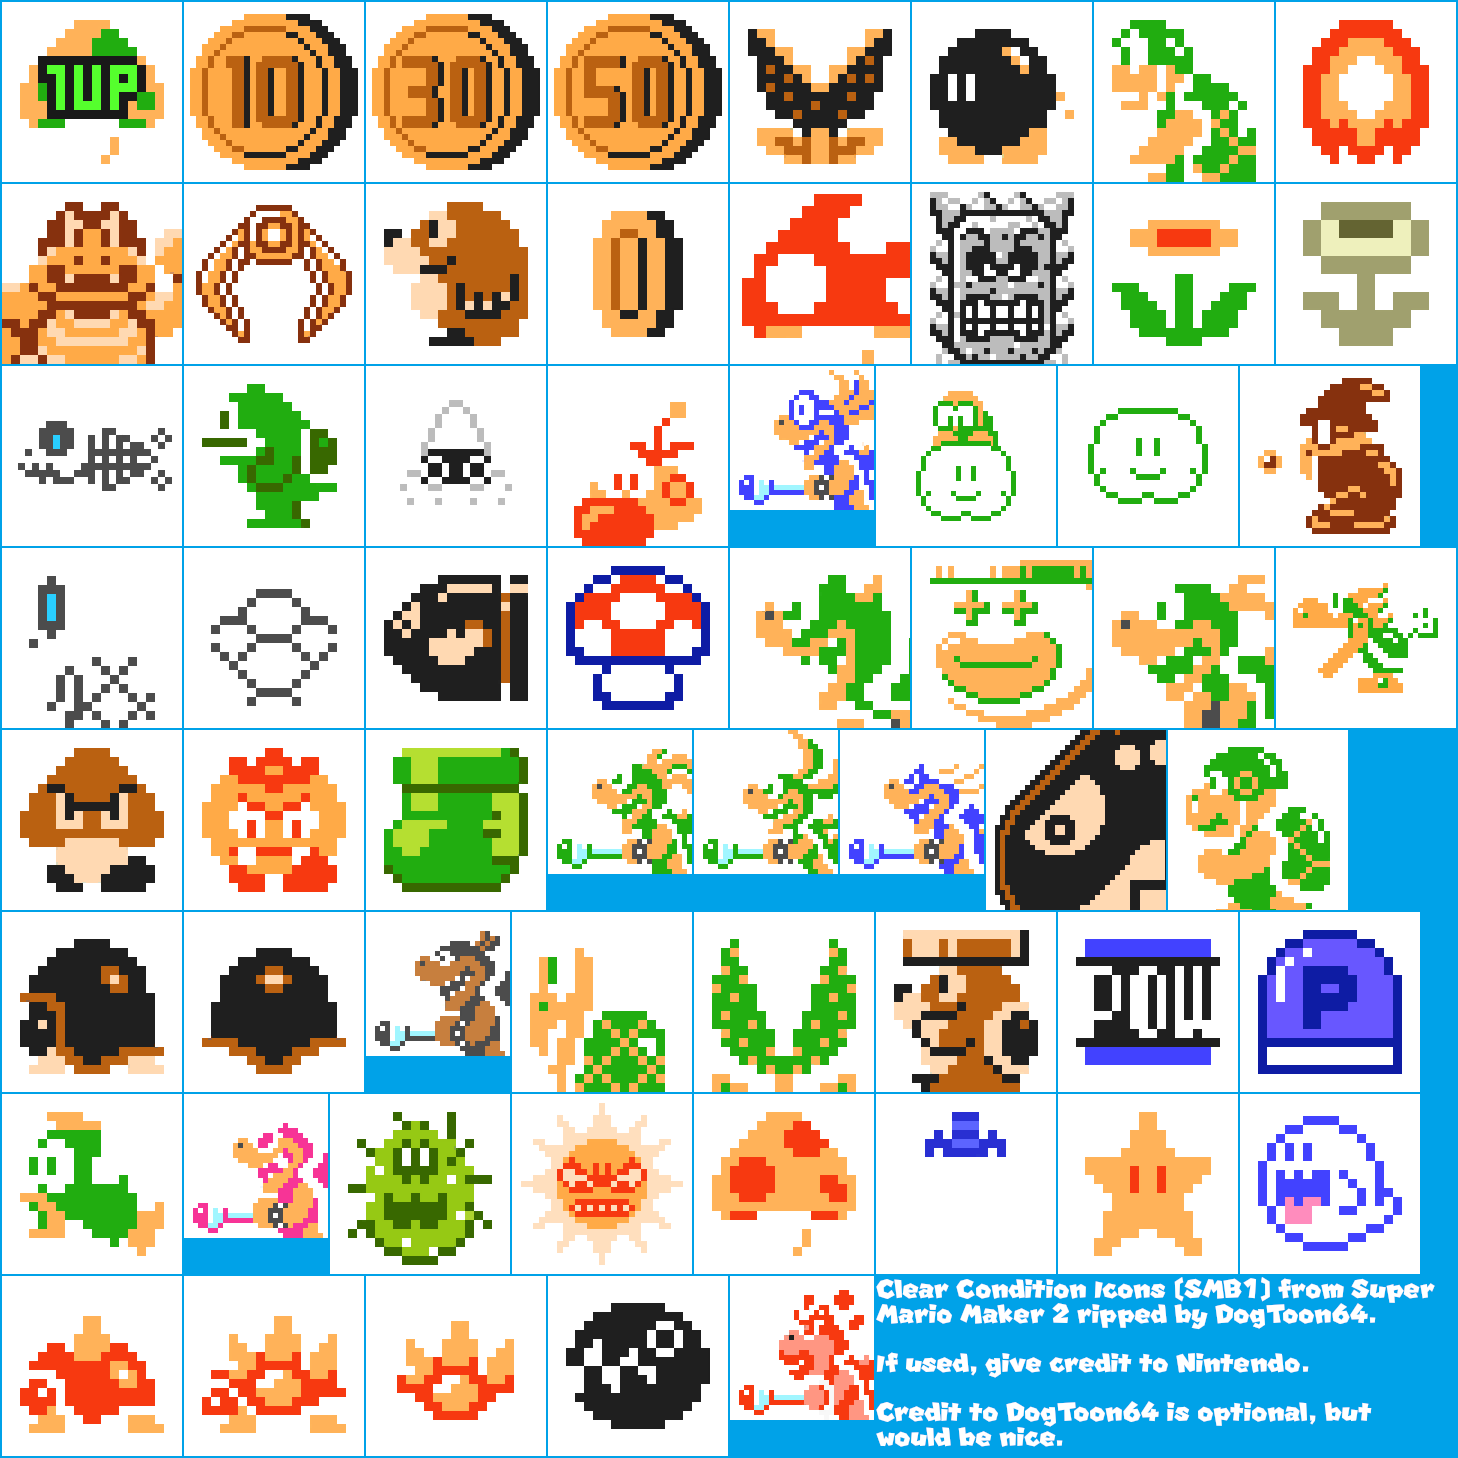 Super Mario Maker 2 - Clear Condition Icons (SMB1)